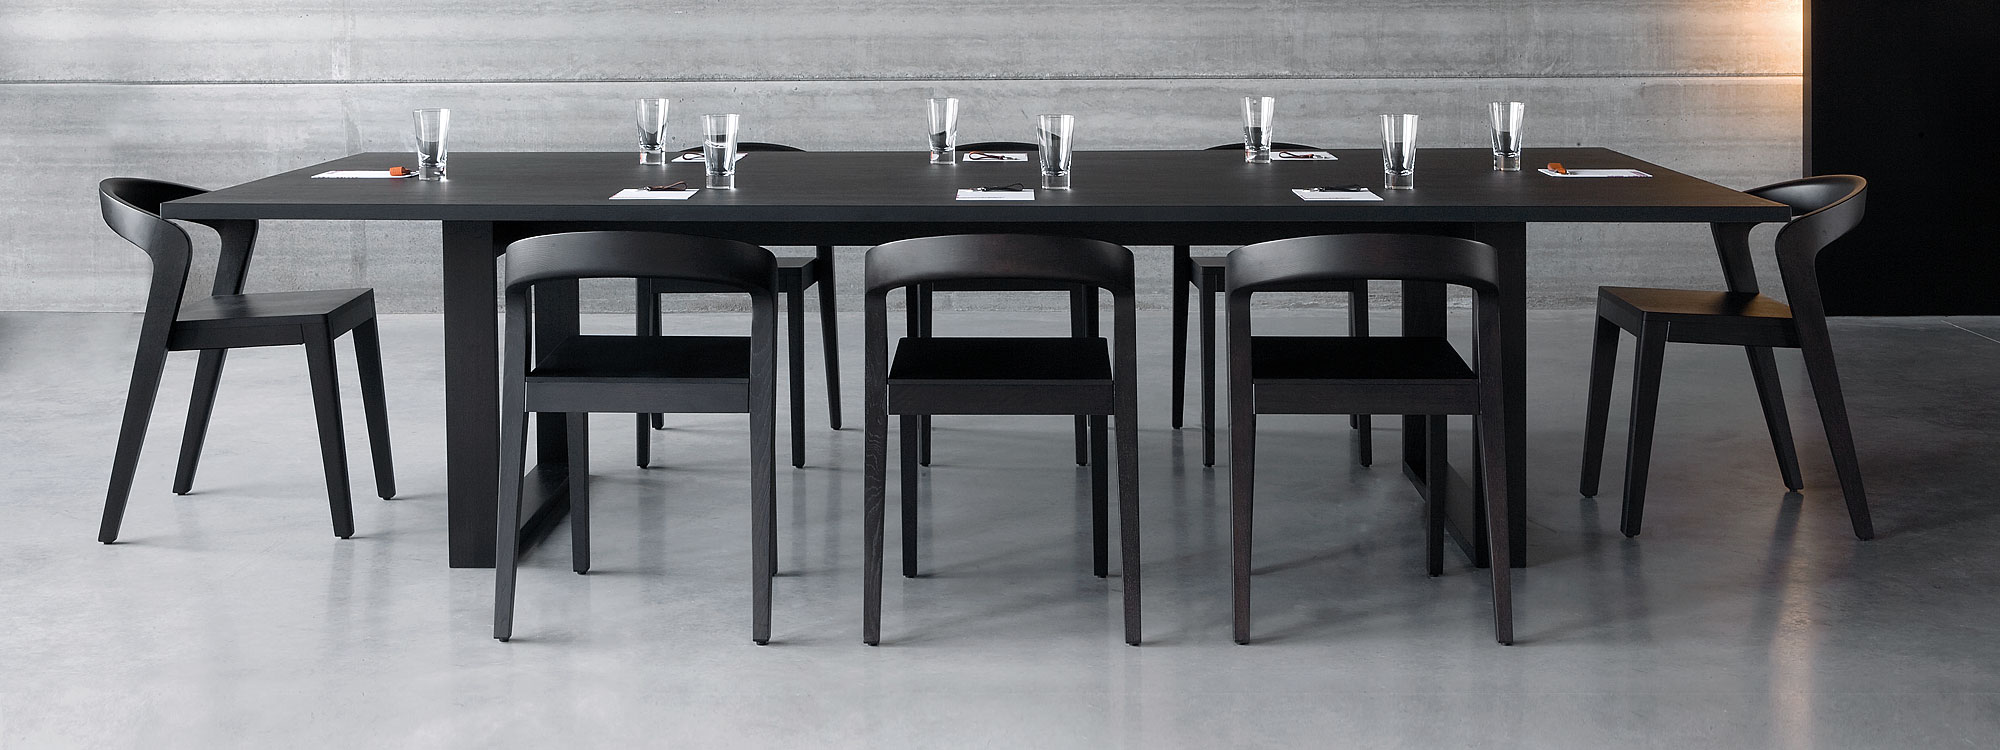 Wildspirit Lati Contemporary Interior Table. Modern Solid Wood Table.